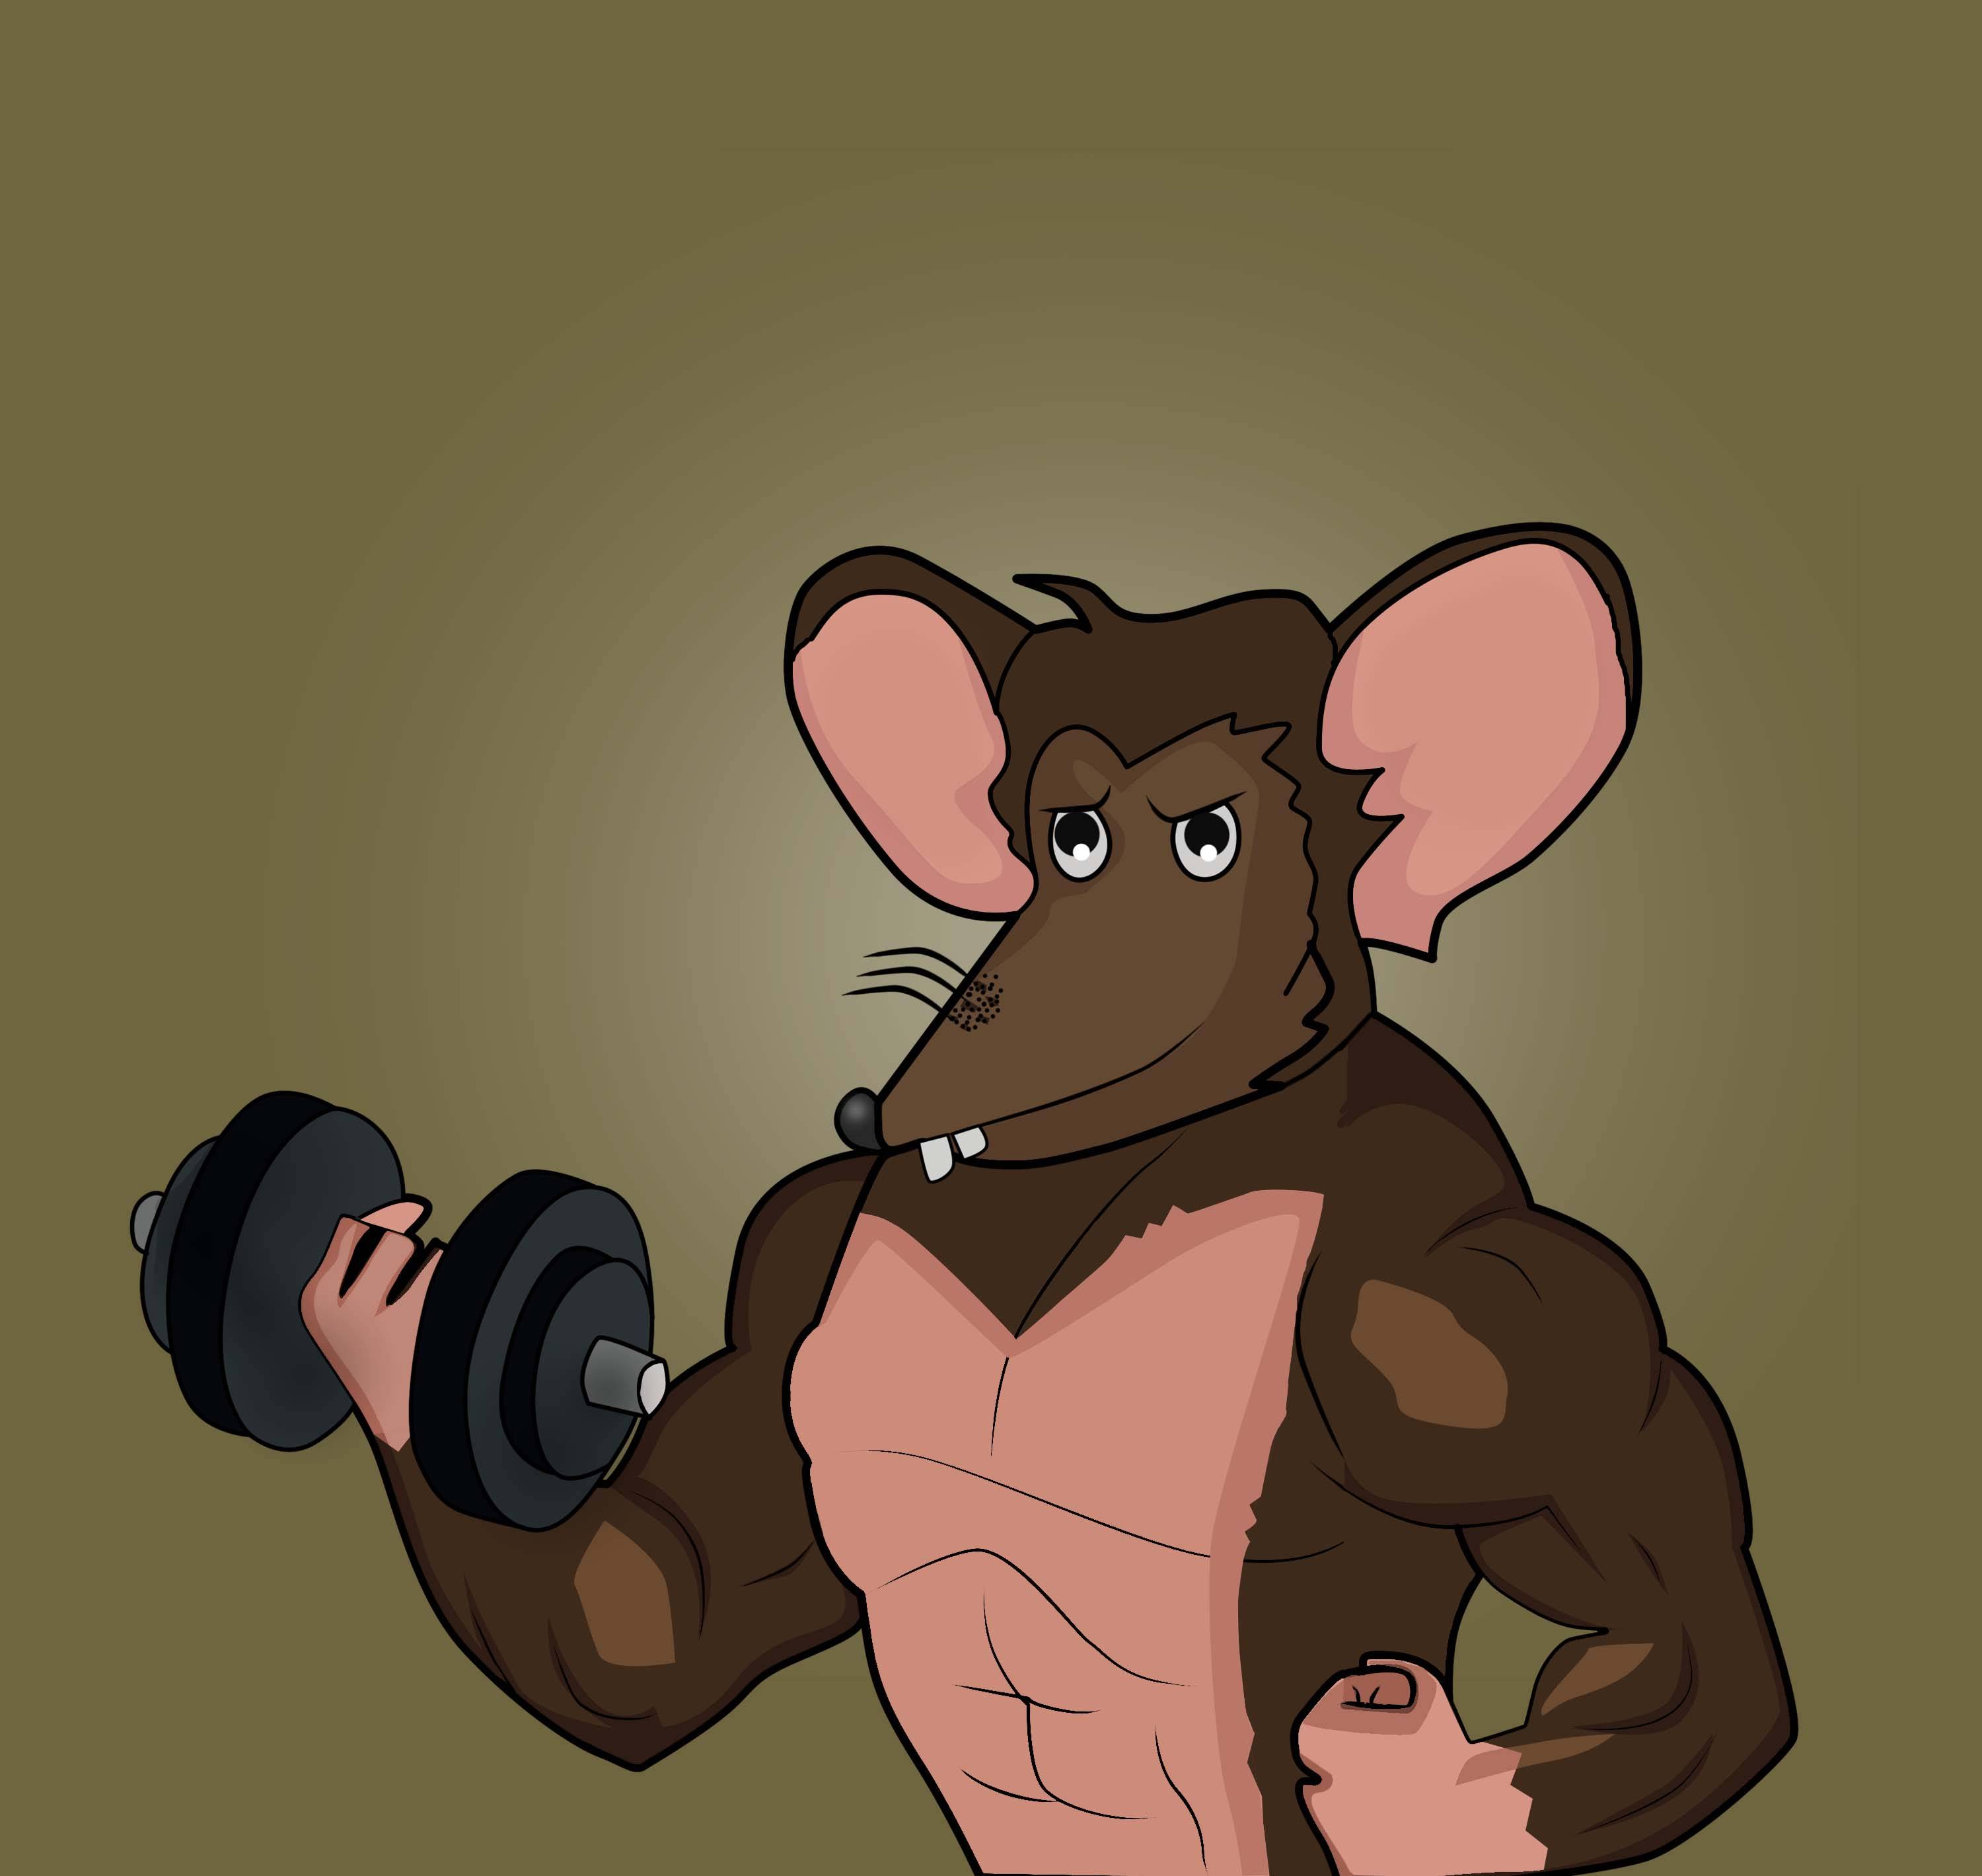 What is a Gym Rat? - NinjAthlete